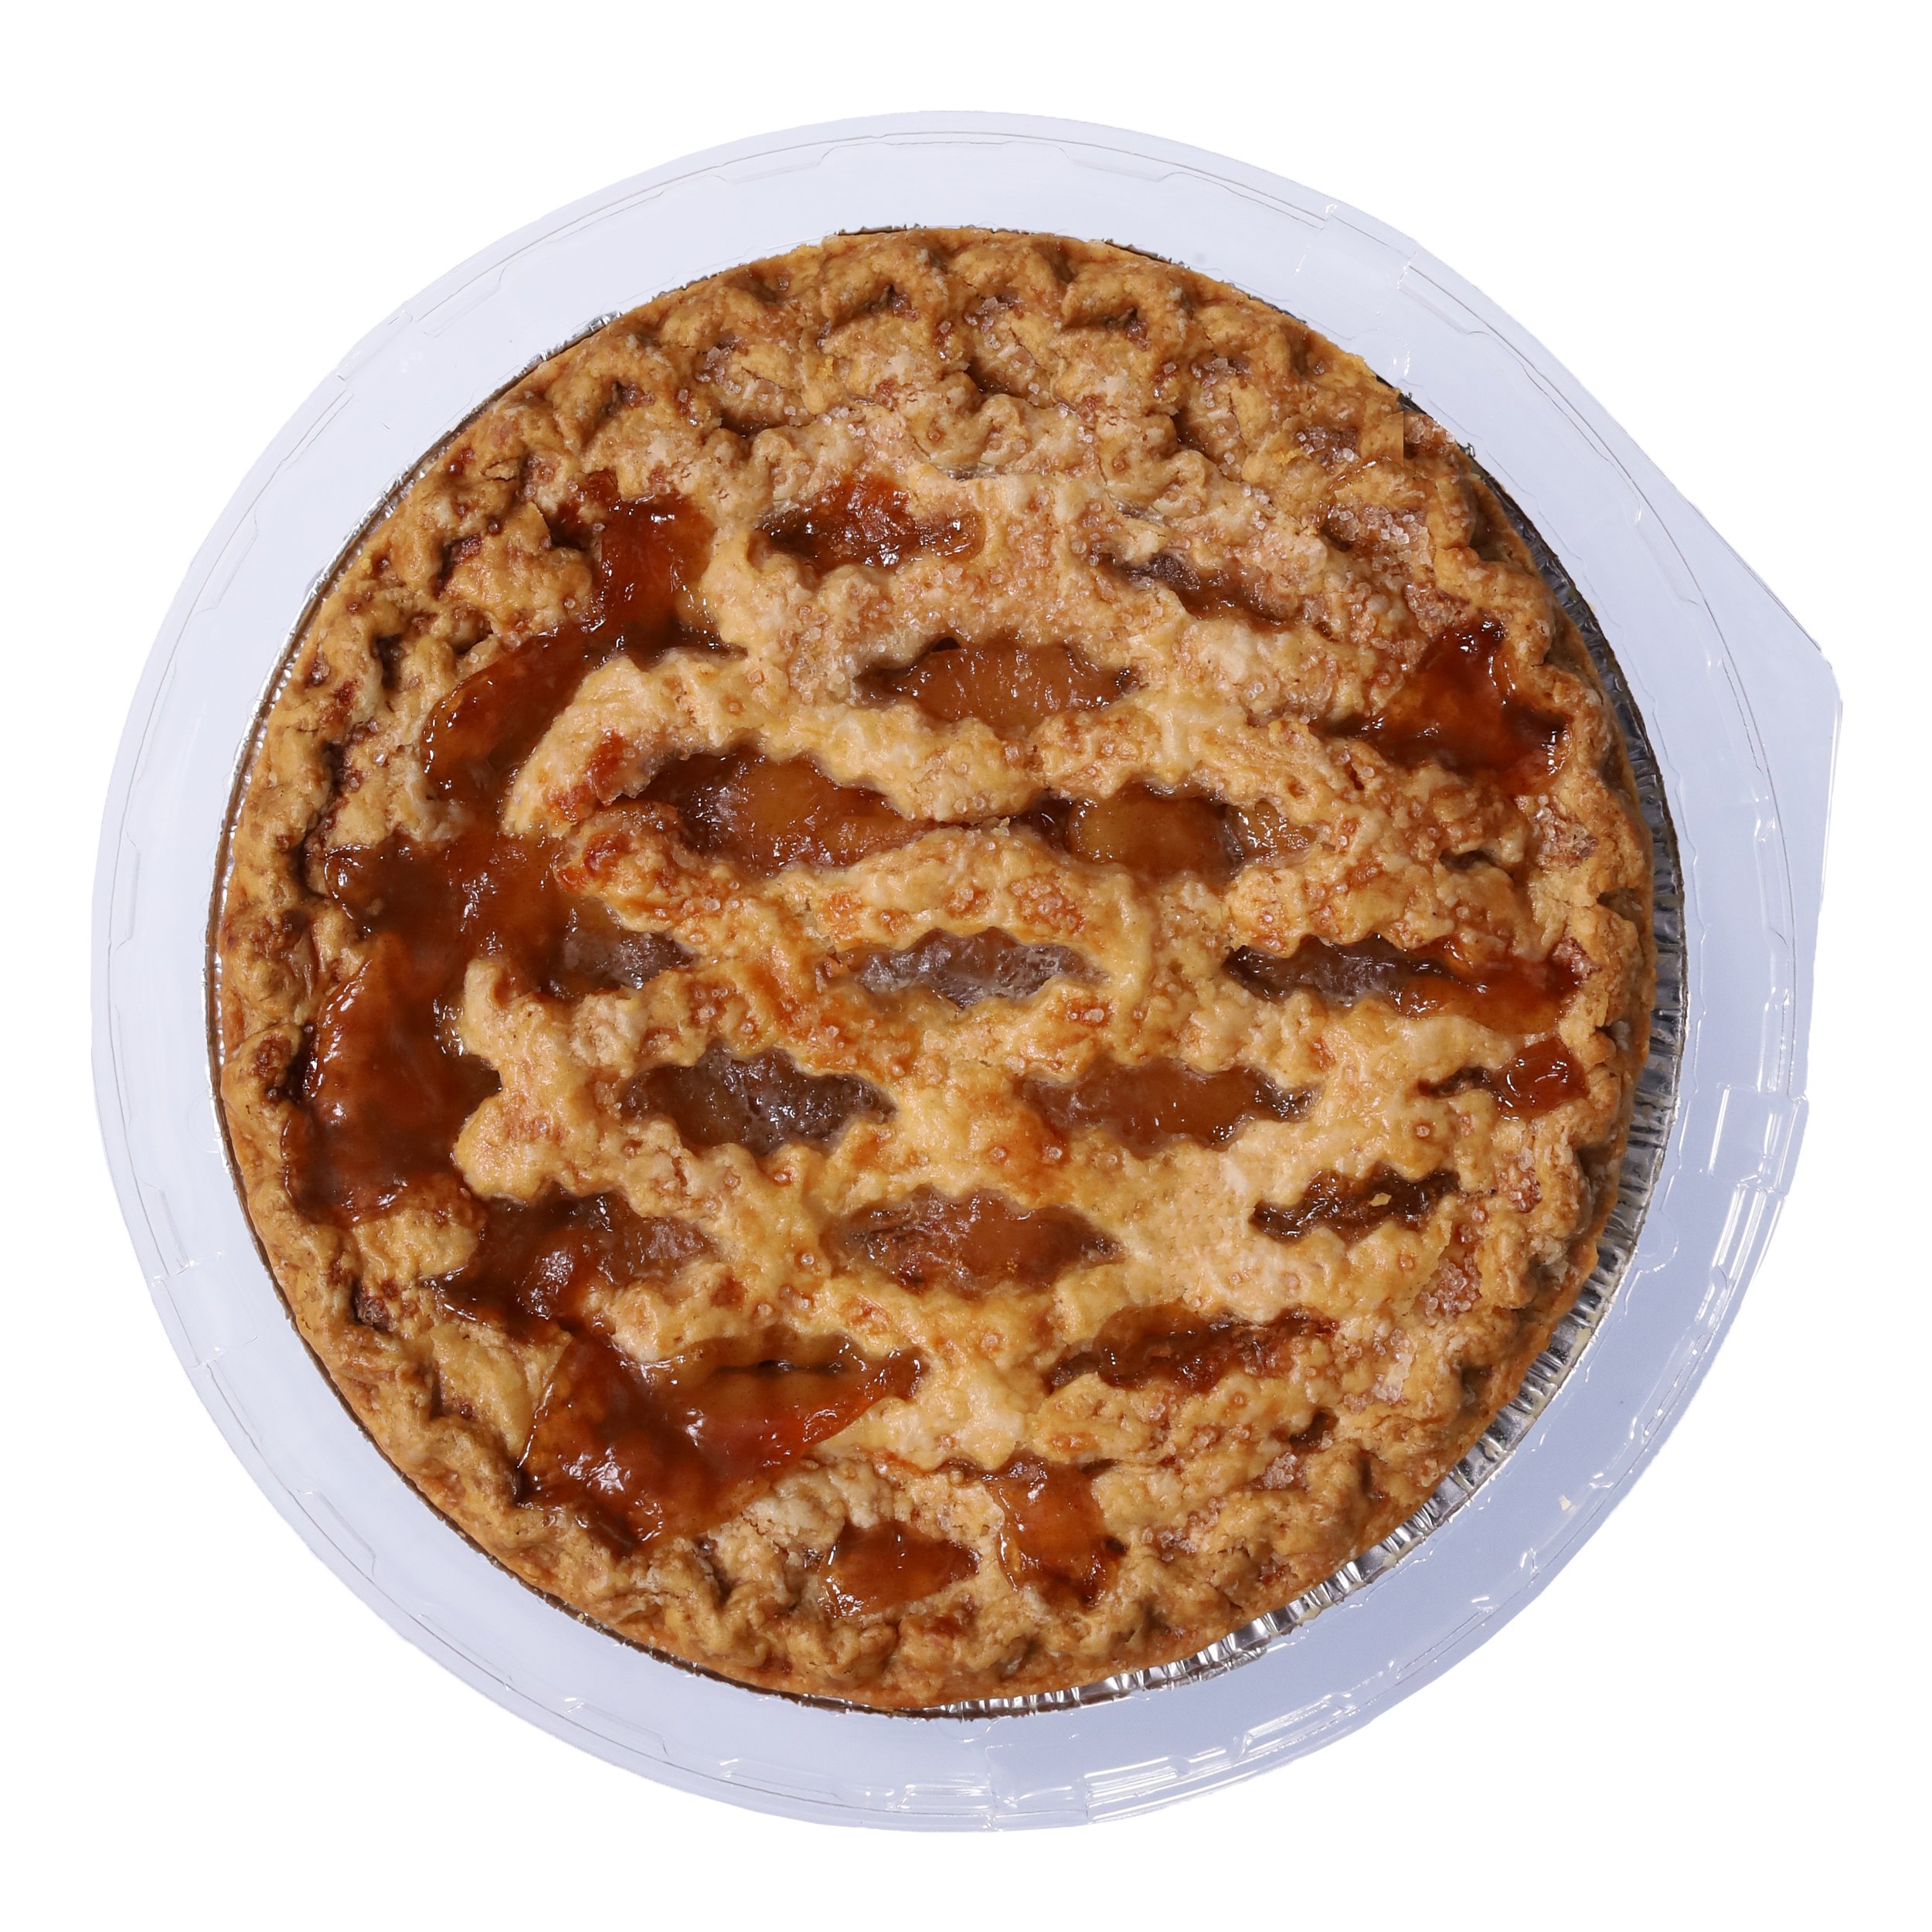 H-E-B Bakery Lattice Apple Pie - Shop Pies at H-E-B